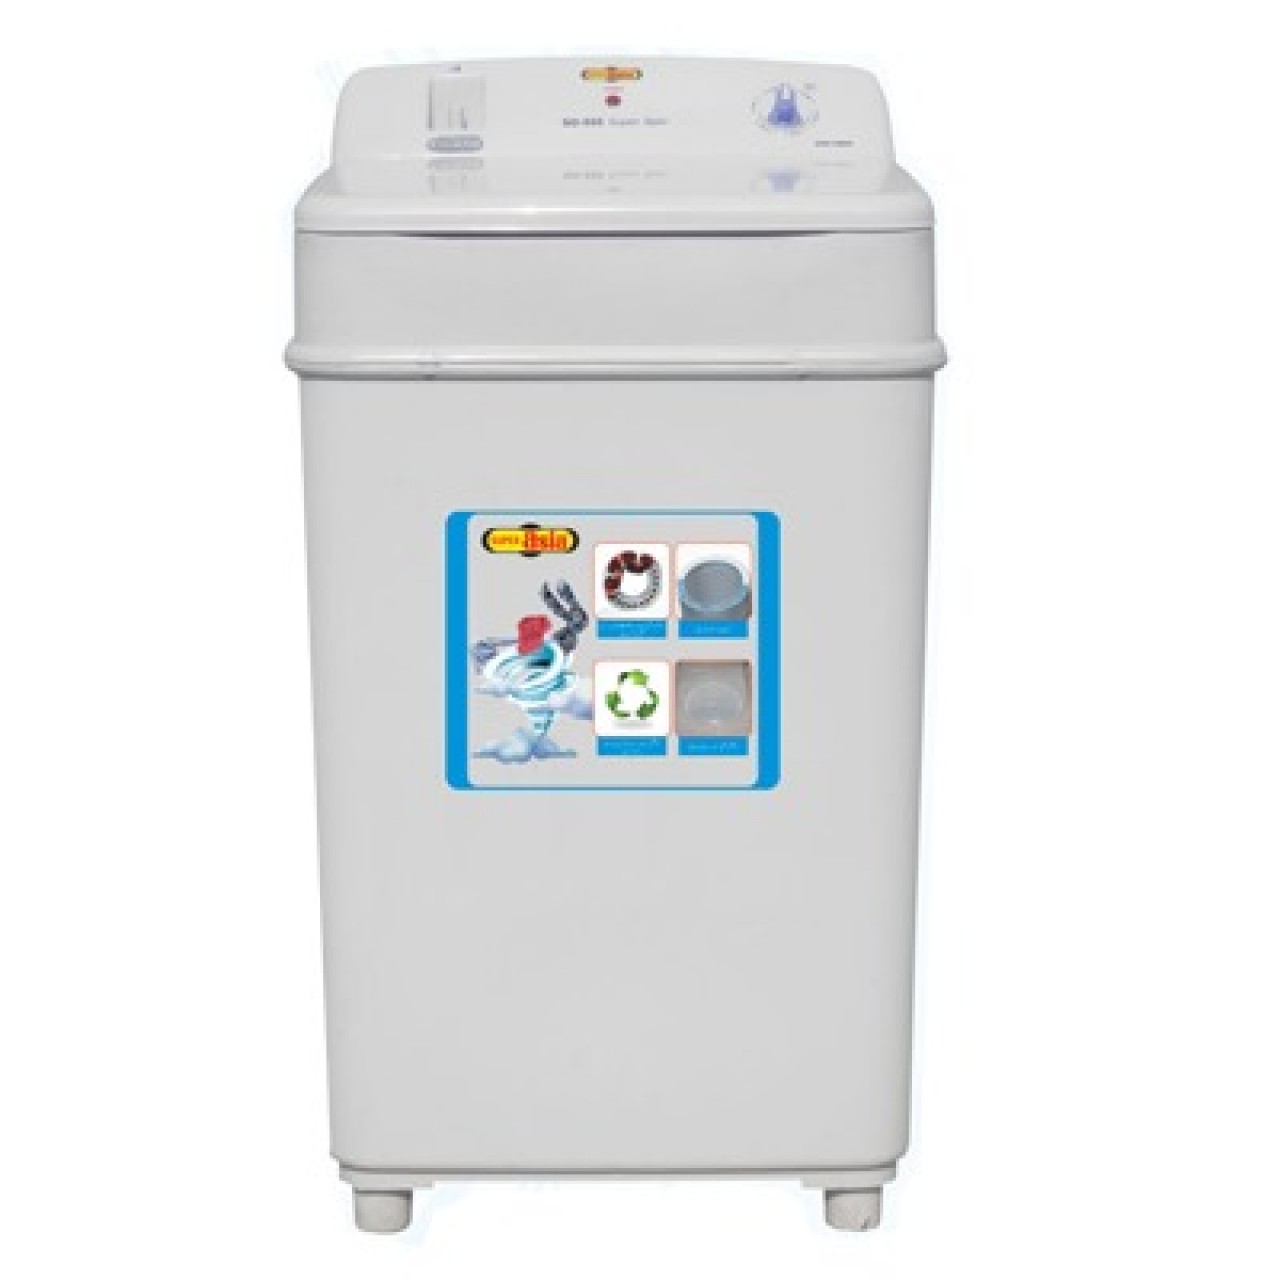 Super Asia SD-555 Super Spin Dryer Machine - Capacity 8Kg